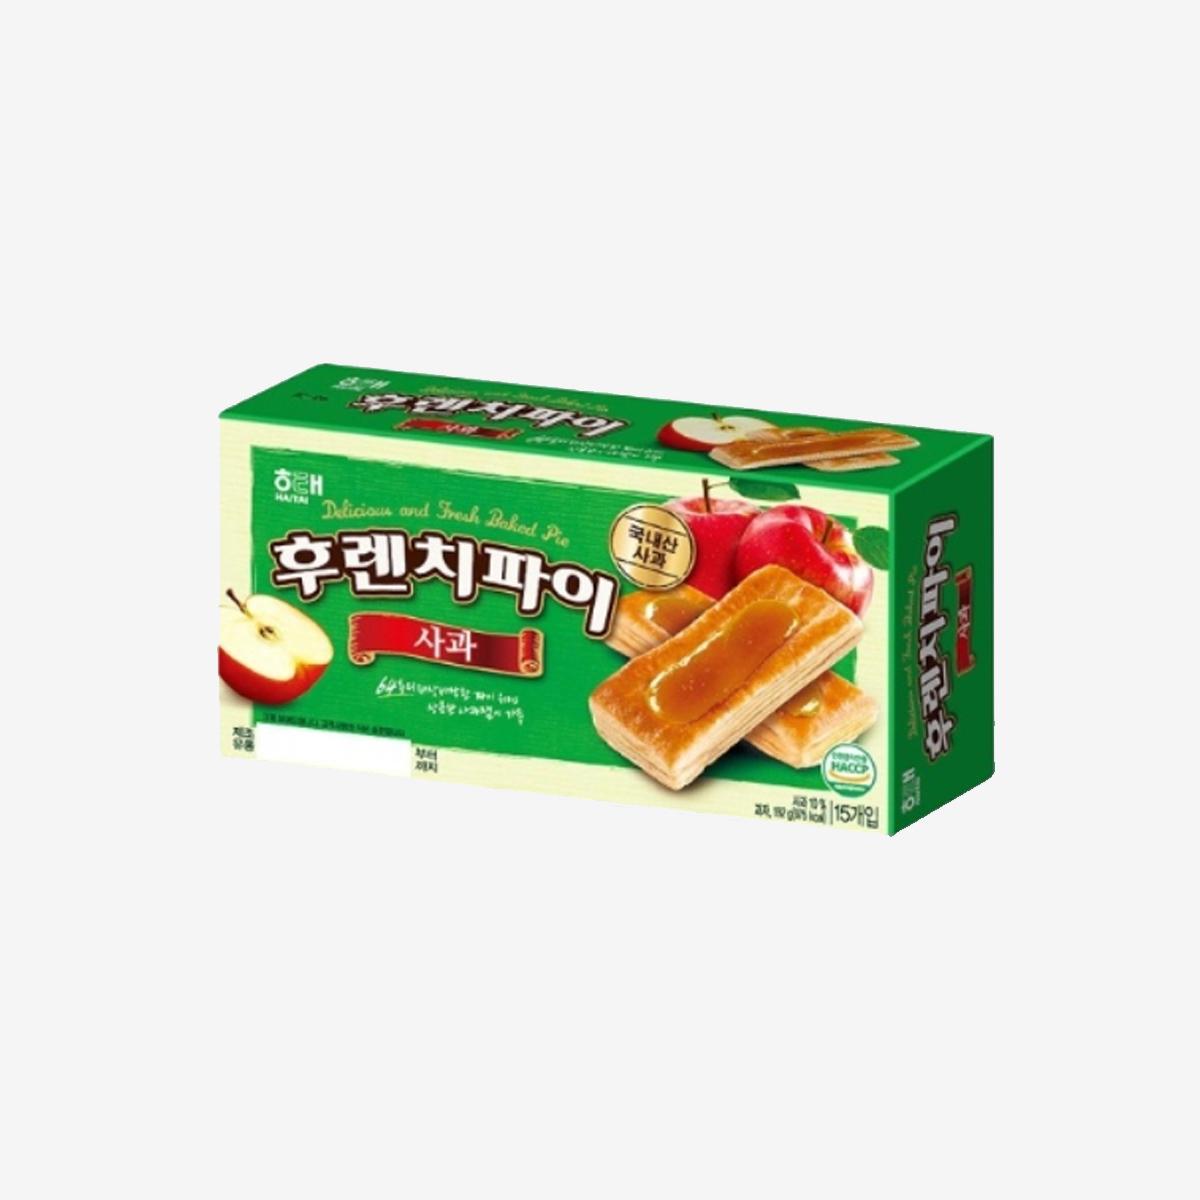 korean brand haitai's apple flavor french pie in green box